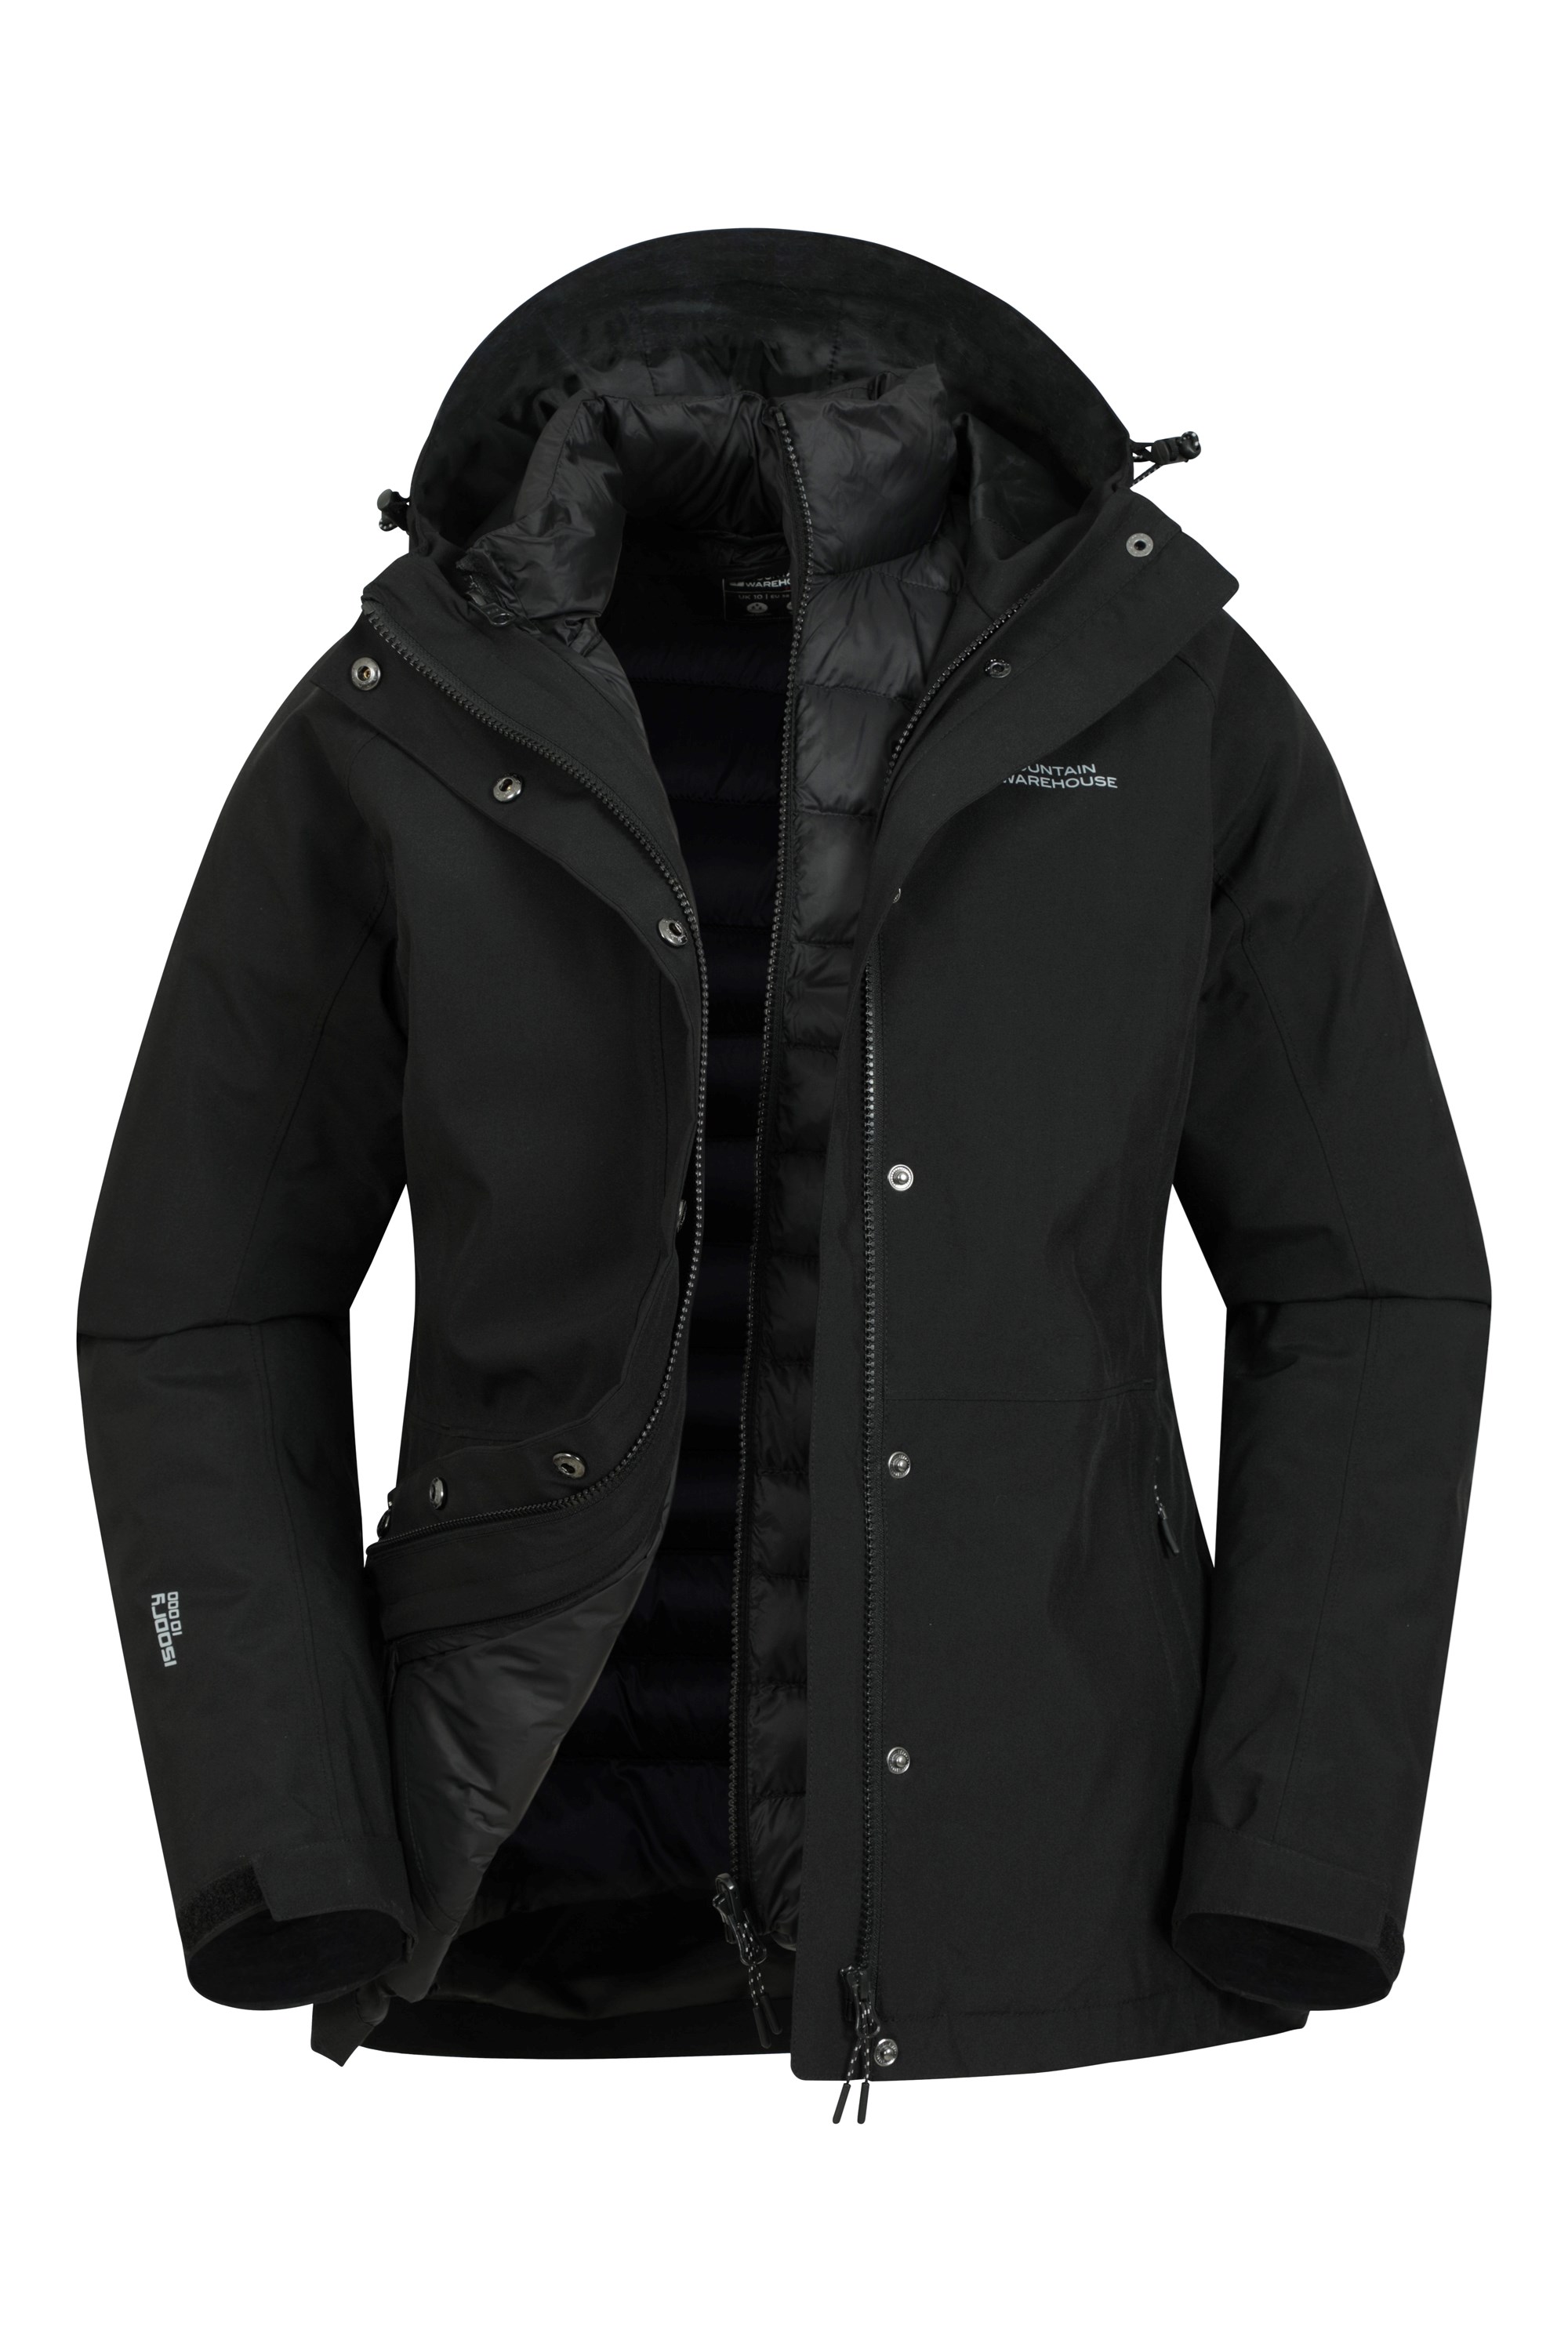 Women's Winter Coats & Jackets | Warm Winter Jackets | ASOS